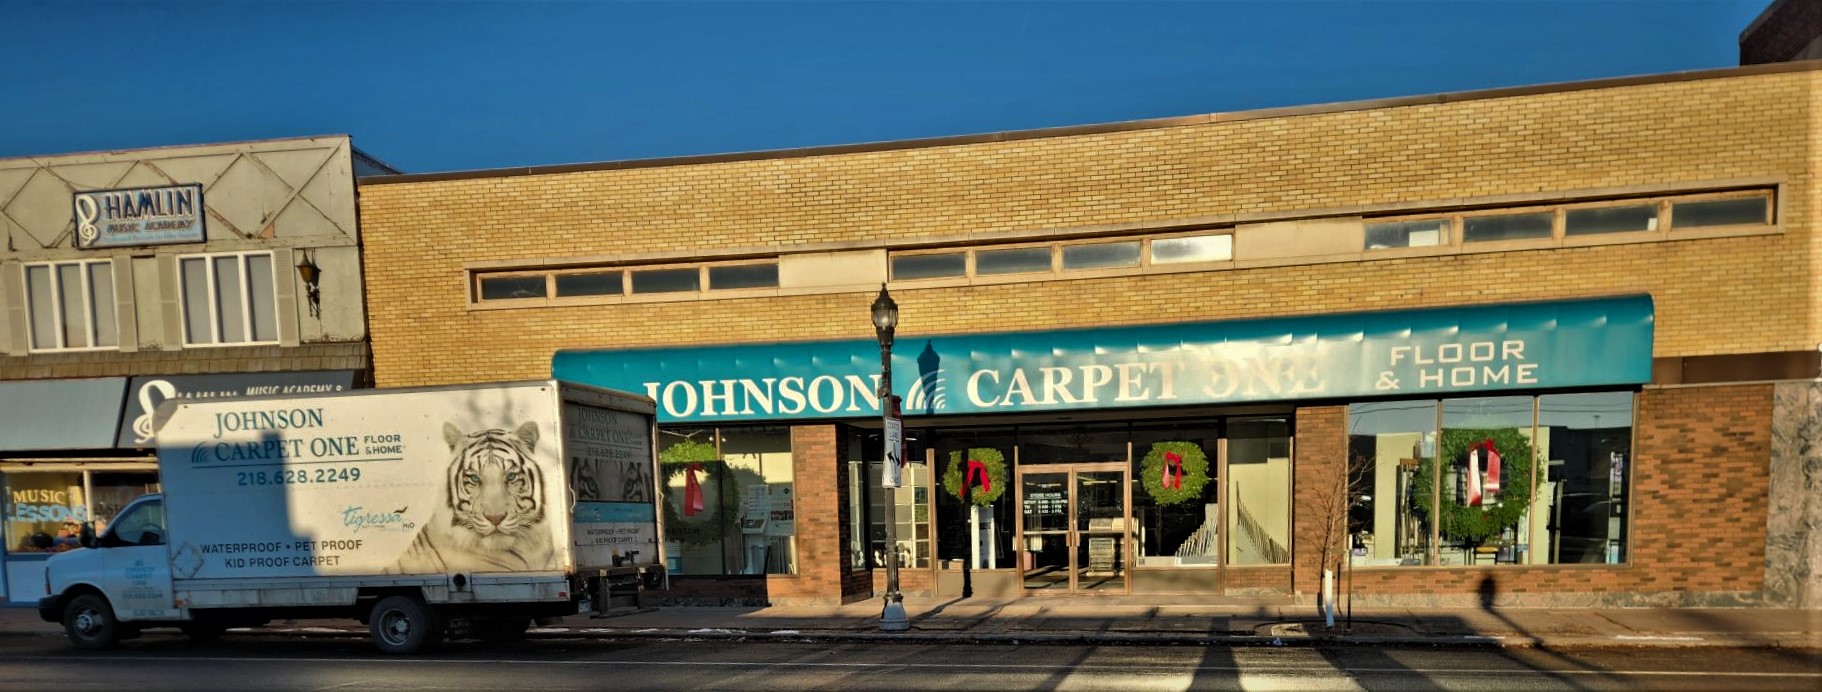 Johnson Carpet One storefront 